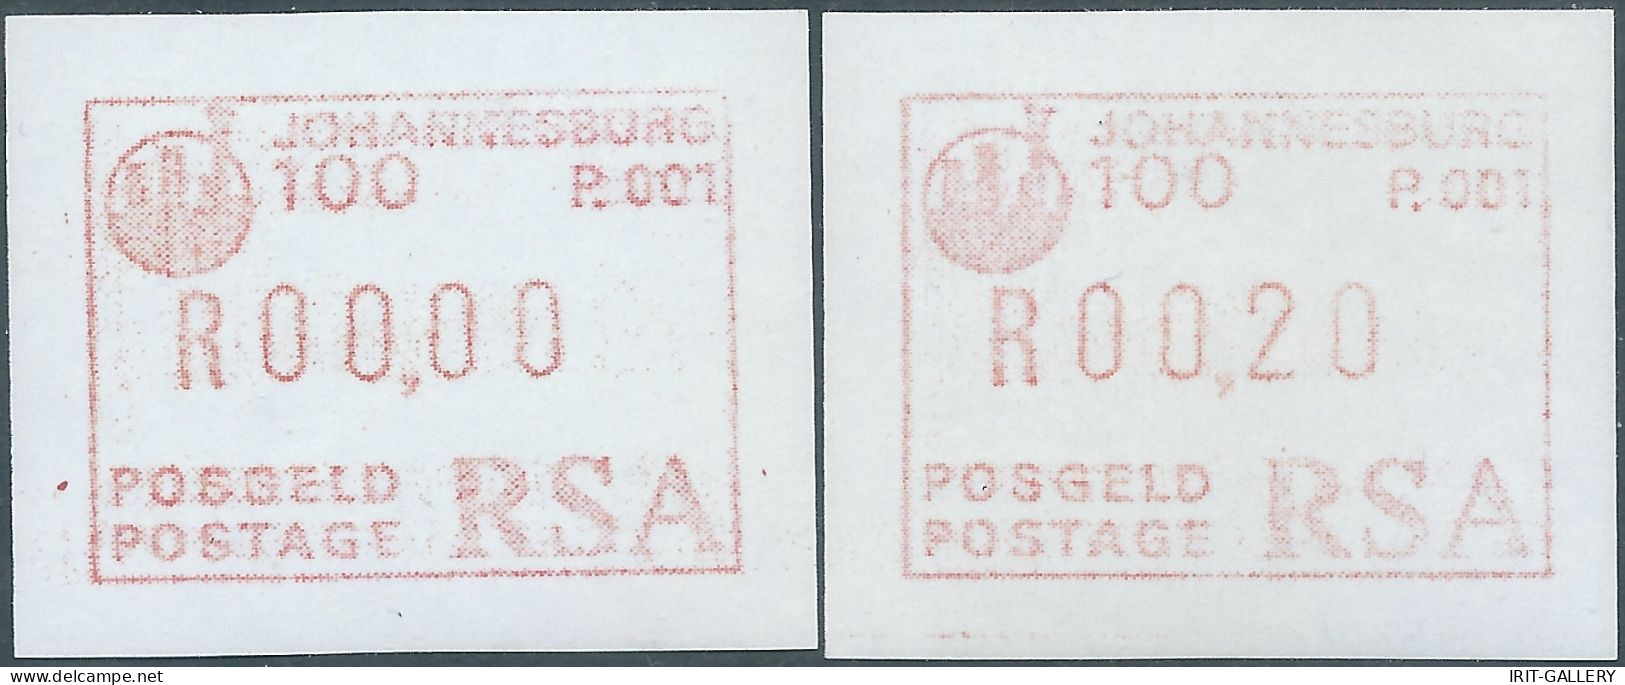 SOUTH AFRICA-AFRIQUE DU SUD-SUD AFRICA,JOHANNESBURG 1986-1987 TWO Frame Label Stamp(RSA)SIMPLE CARD,MNH - Nuovi